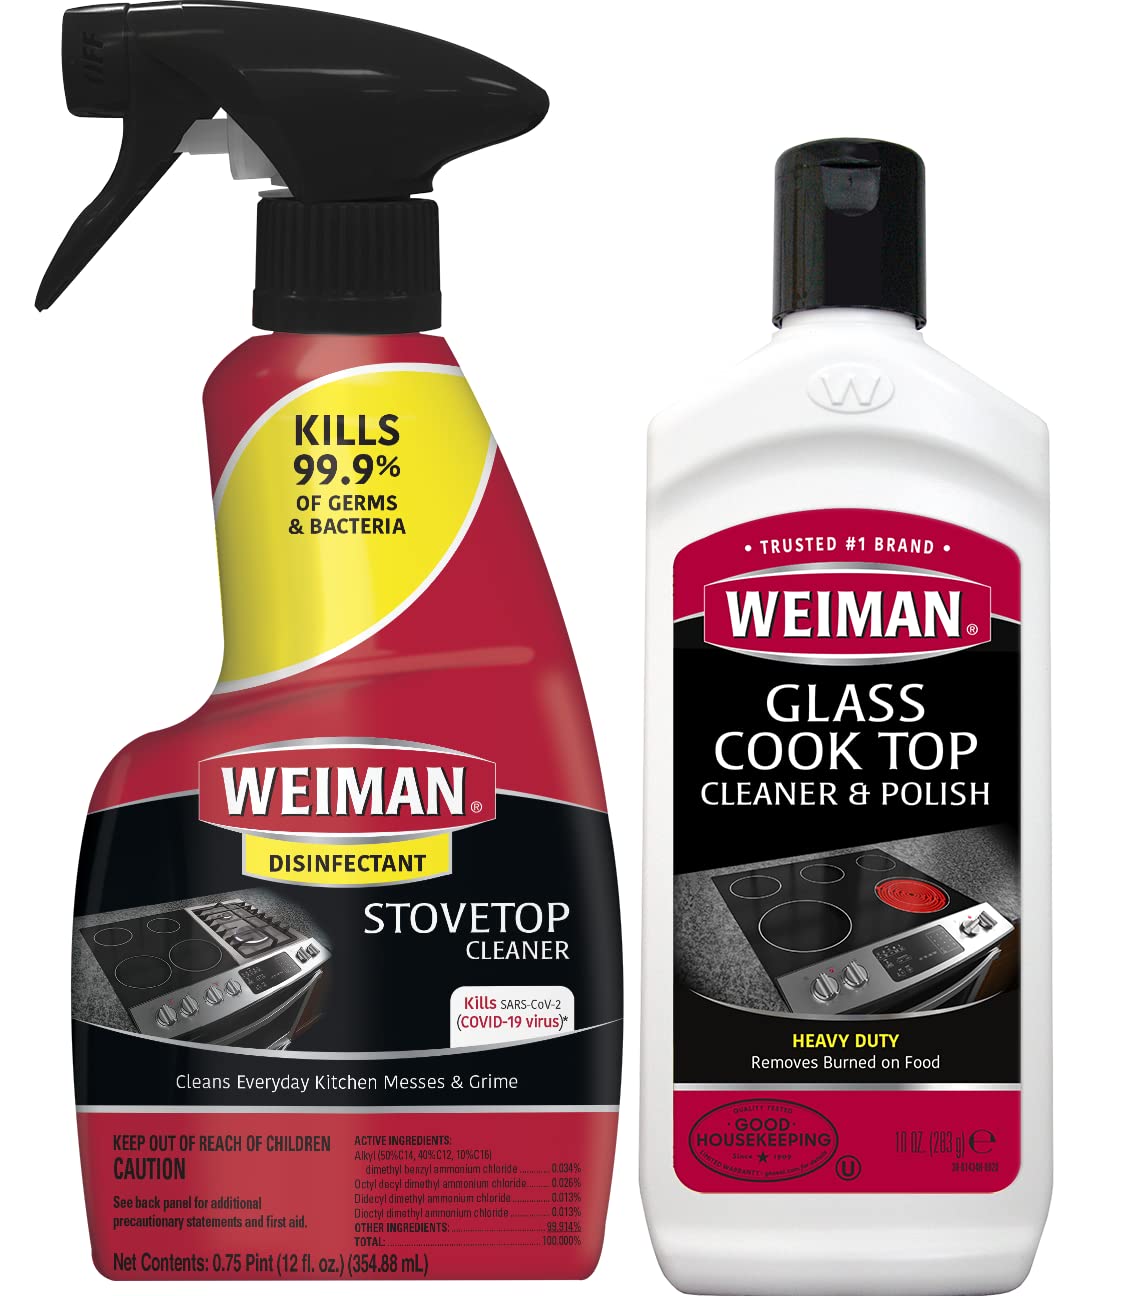 Weiman Leather Cleaner & Polish - 12 fl oz spray bottle